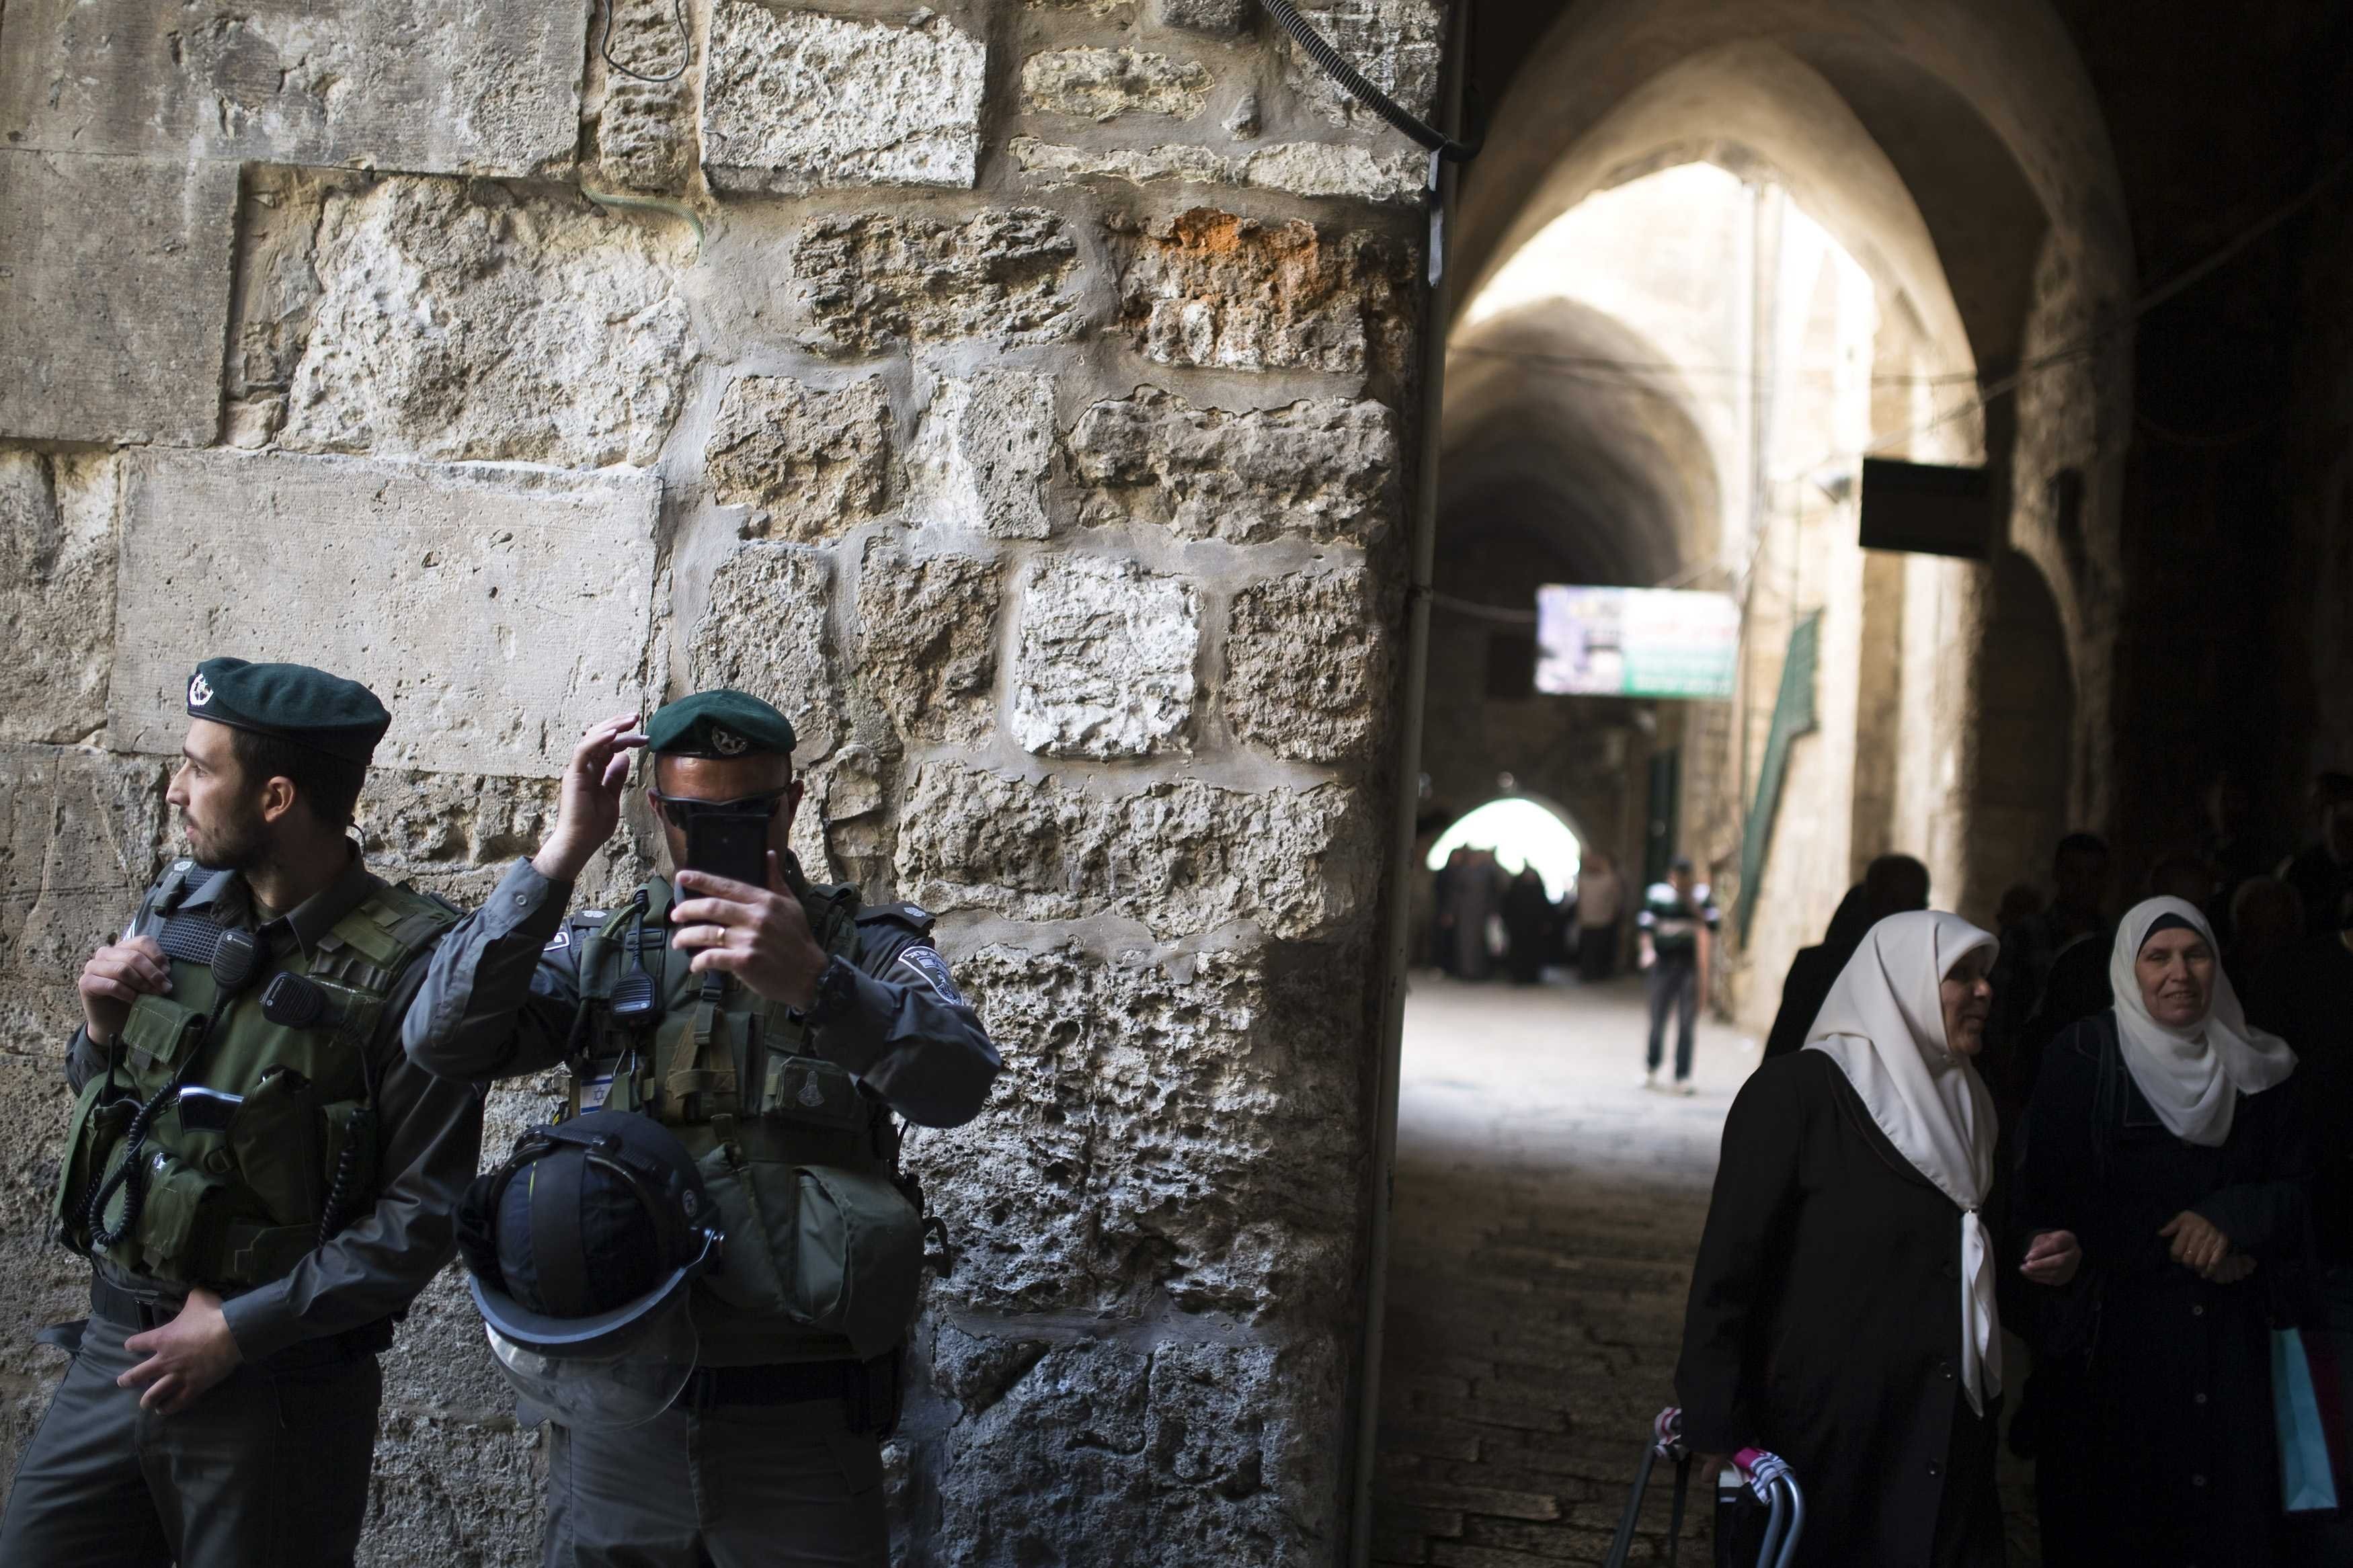 Palestinian women walk near Israeli border policemen after Friday prayers in Jerusalem's Old City